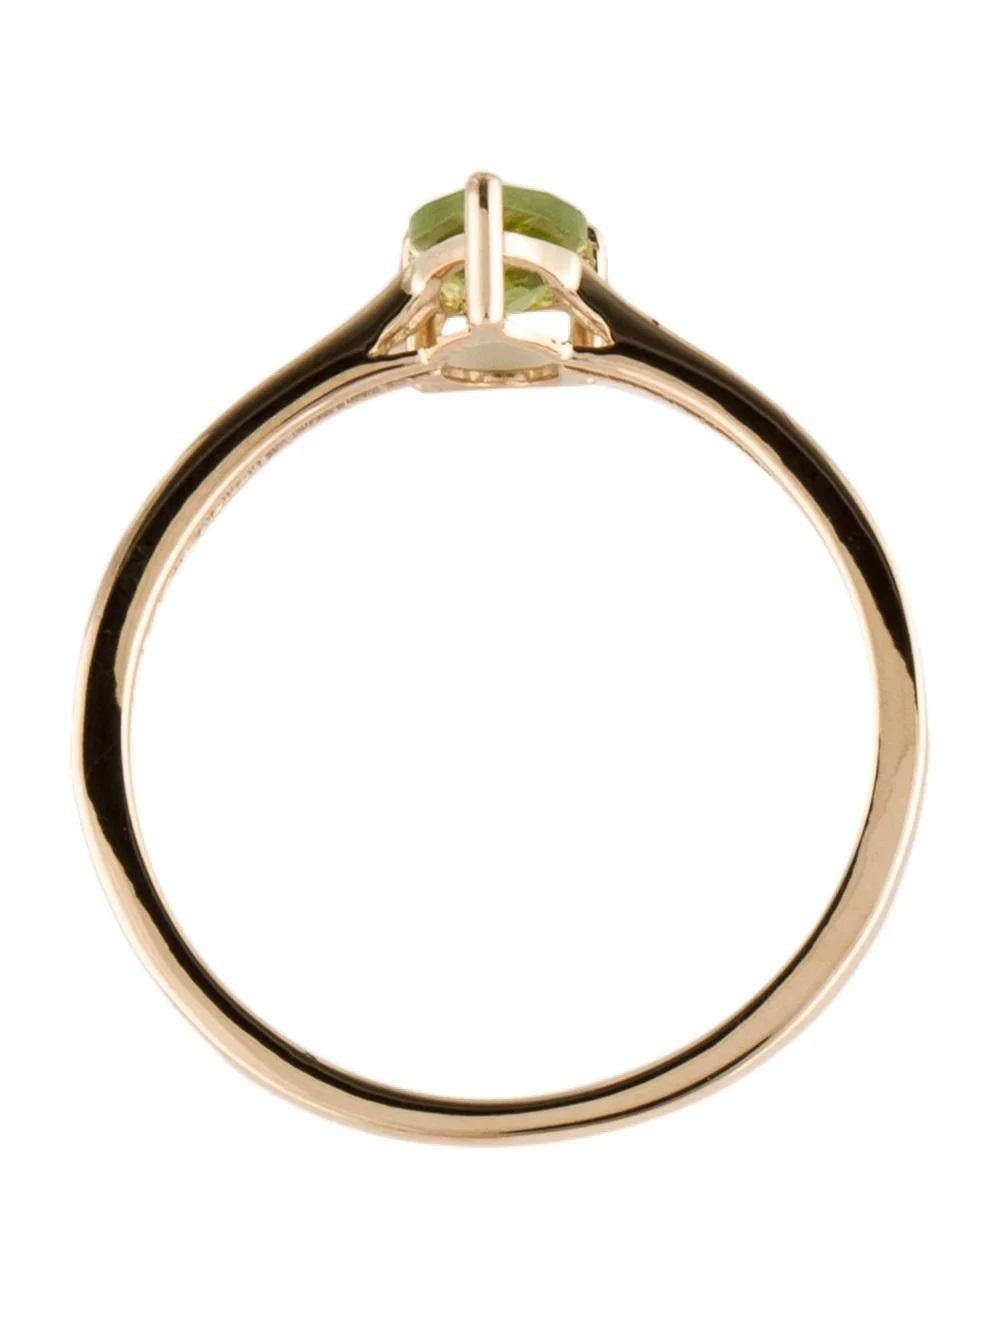 Women's 14K Peridot Cocktail Ring, Size 6.75 - Green Gemstone, Timeless Design, Elegant For Sale